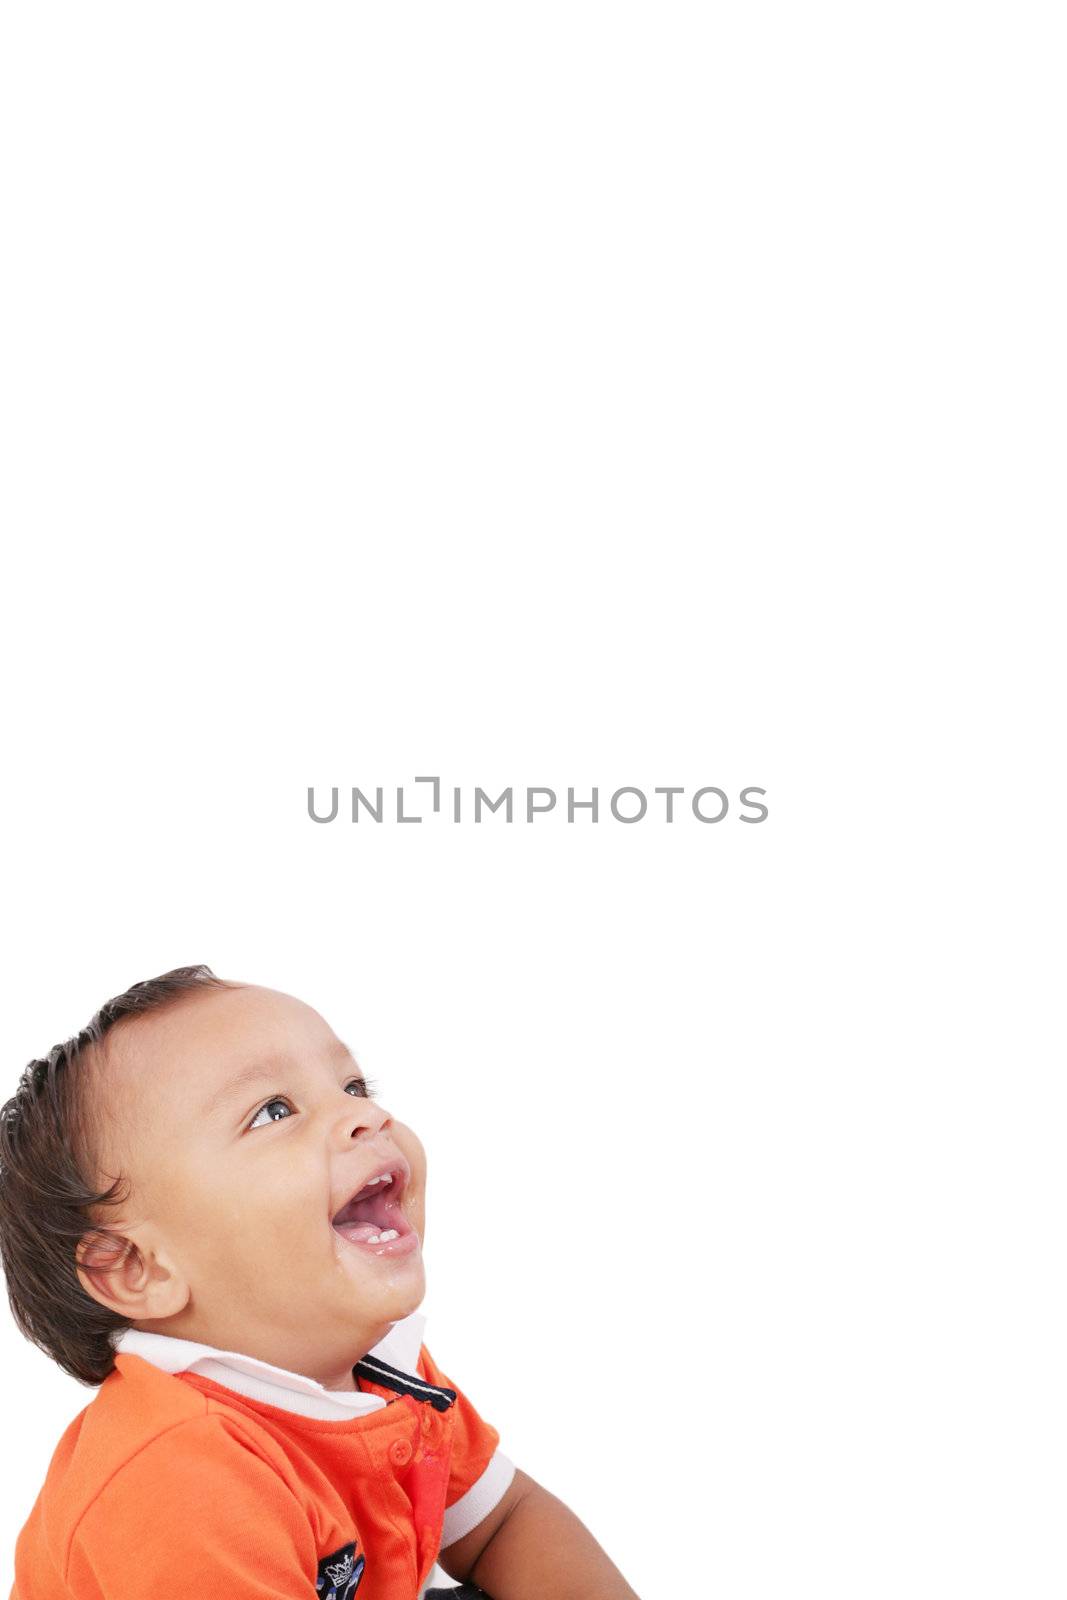 Hispanic baby boy sit on floor kaughing portrait on isolated whi by dacasdo